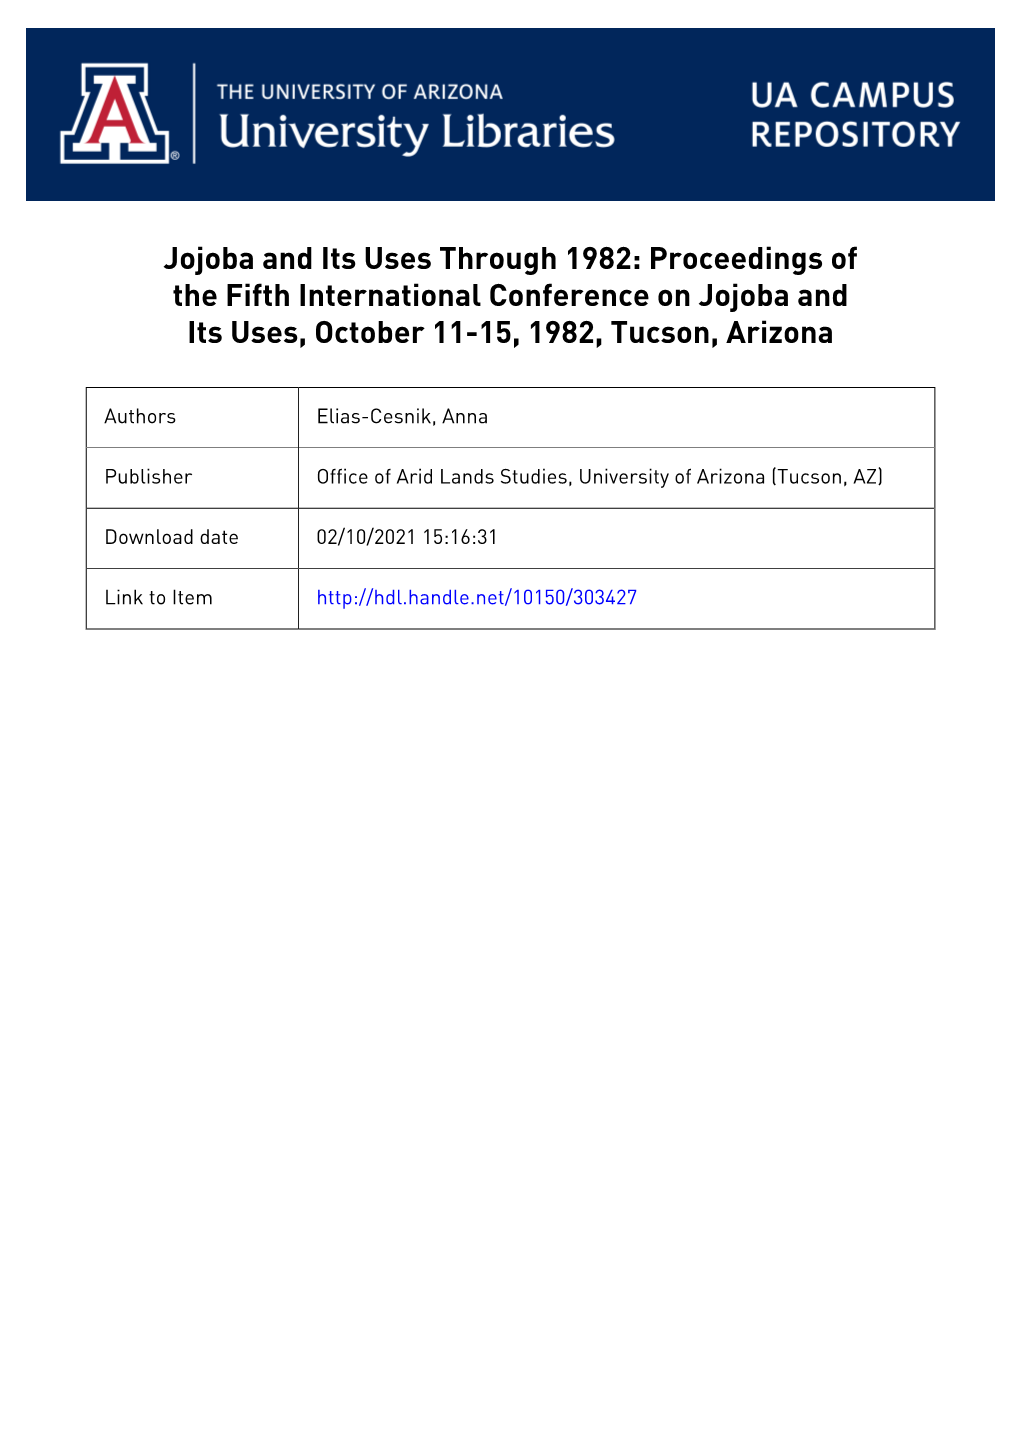 Jojoba and Its Uses Through 1982: Proceedings of the Fifth International Conference on Jojoba and Its Uses, October 11-15, 1982, Tucson, Arizona